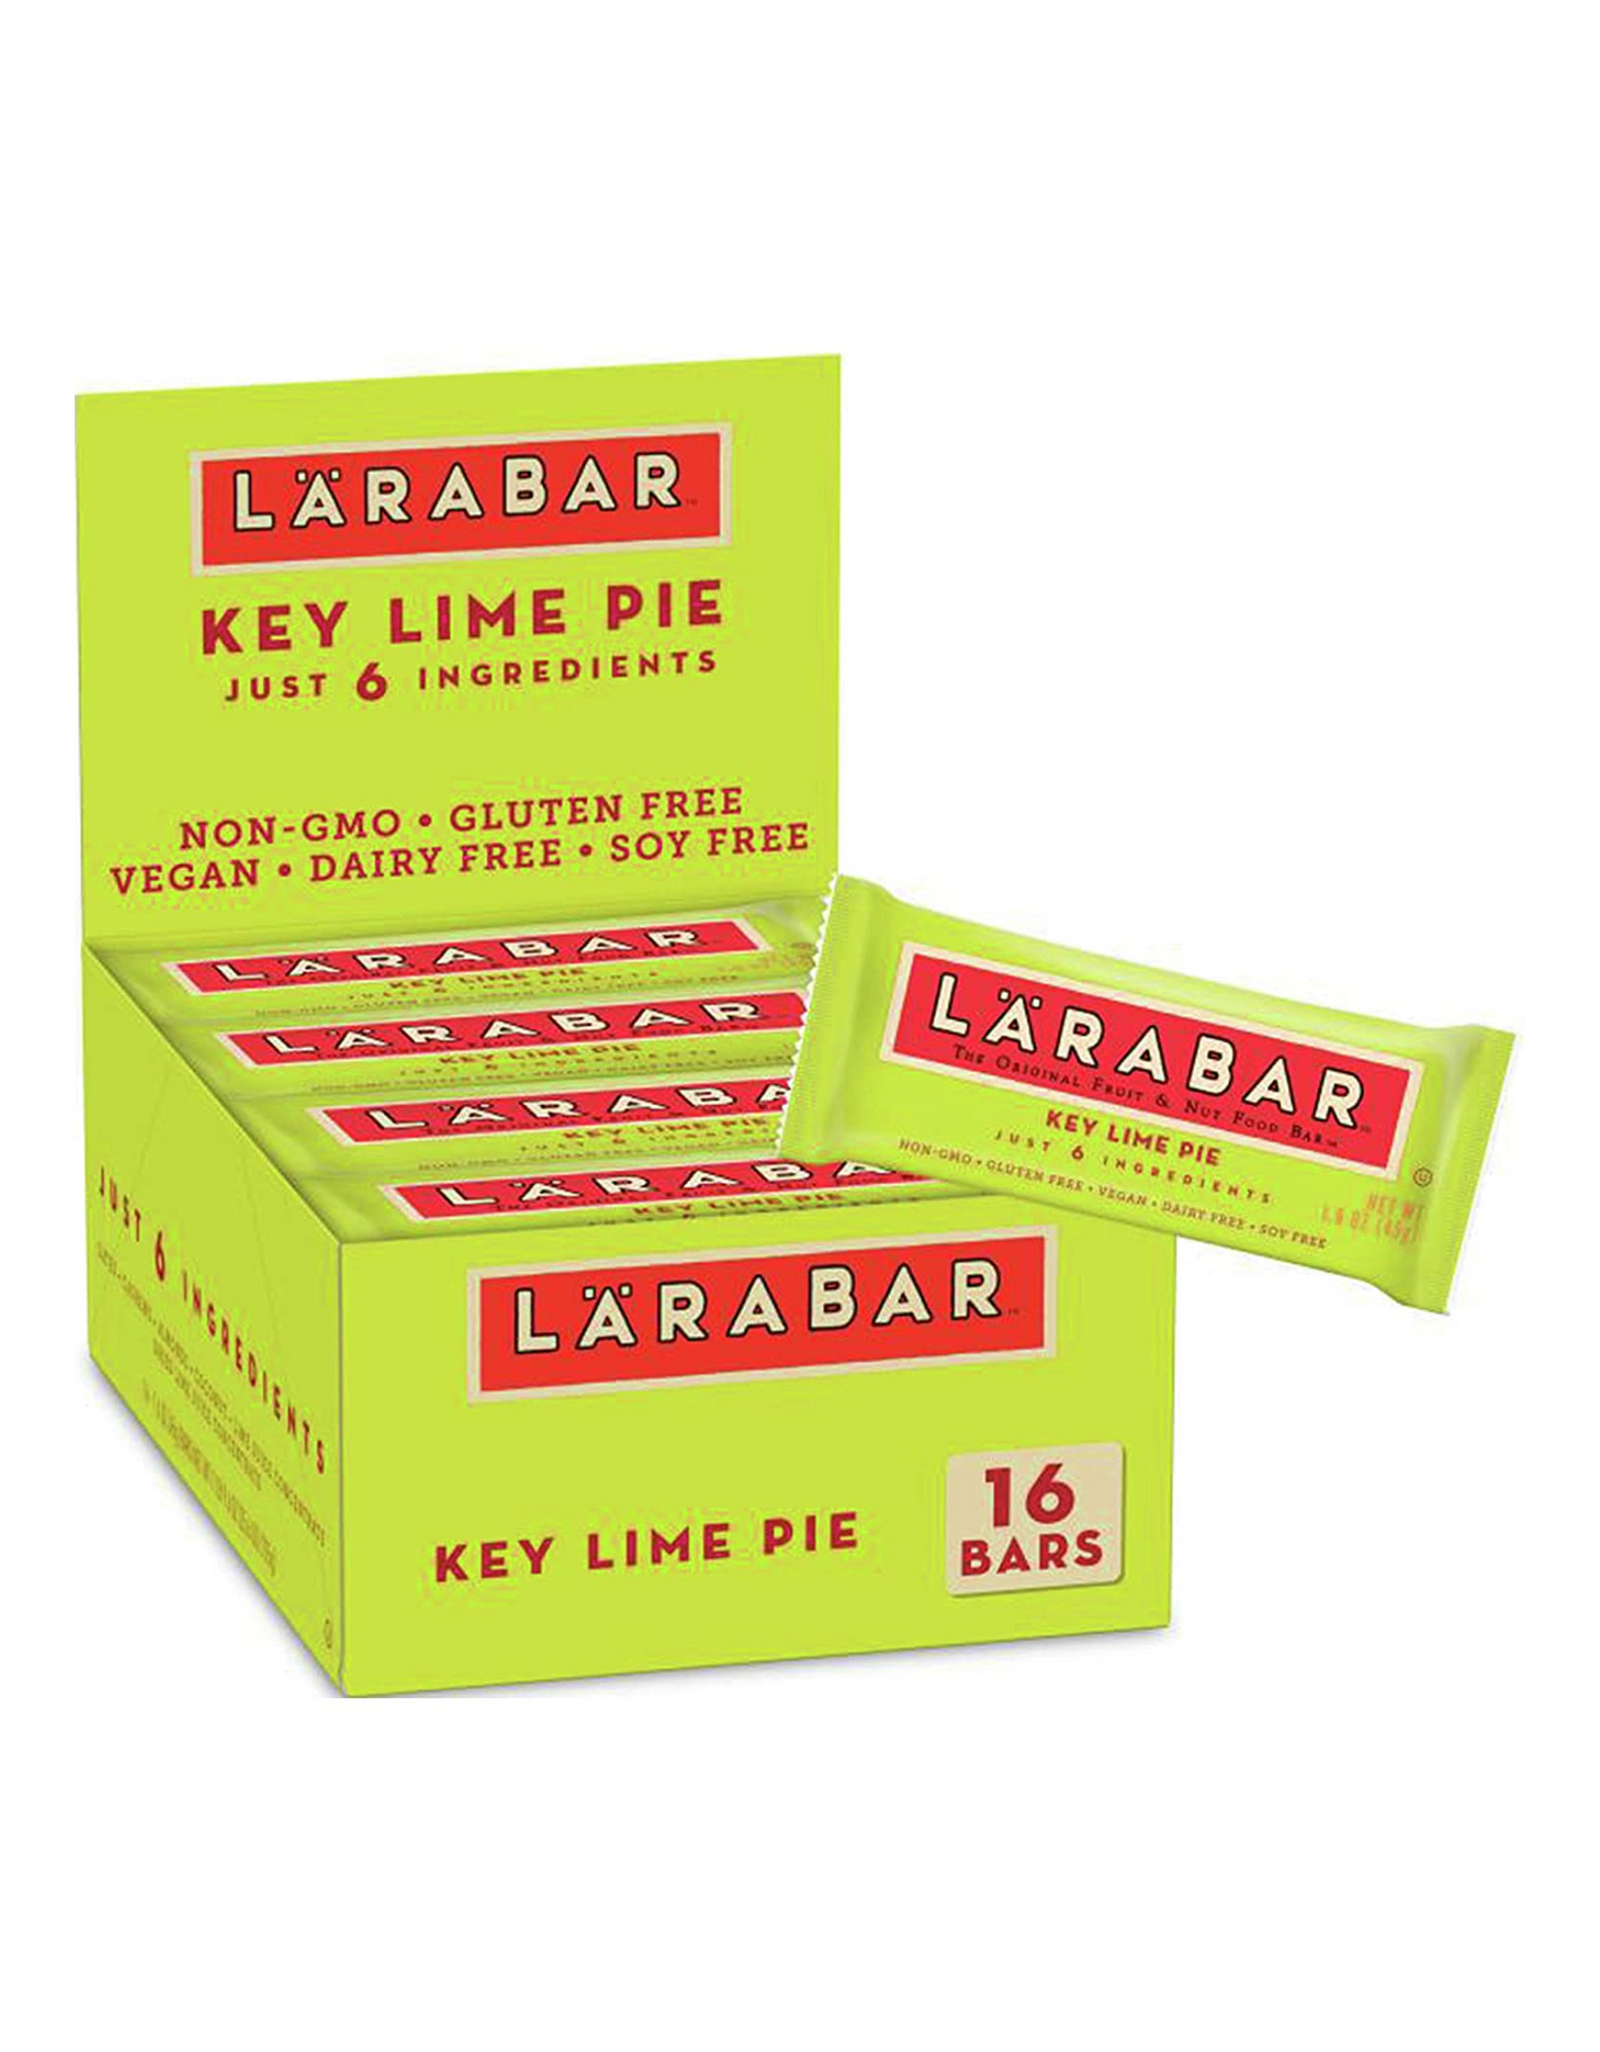 Larabar Key Lime Pie, Original Real Fruit and Nut Bar, 1.7 oz, 16 Count